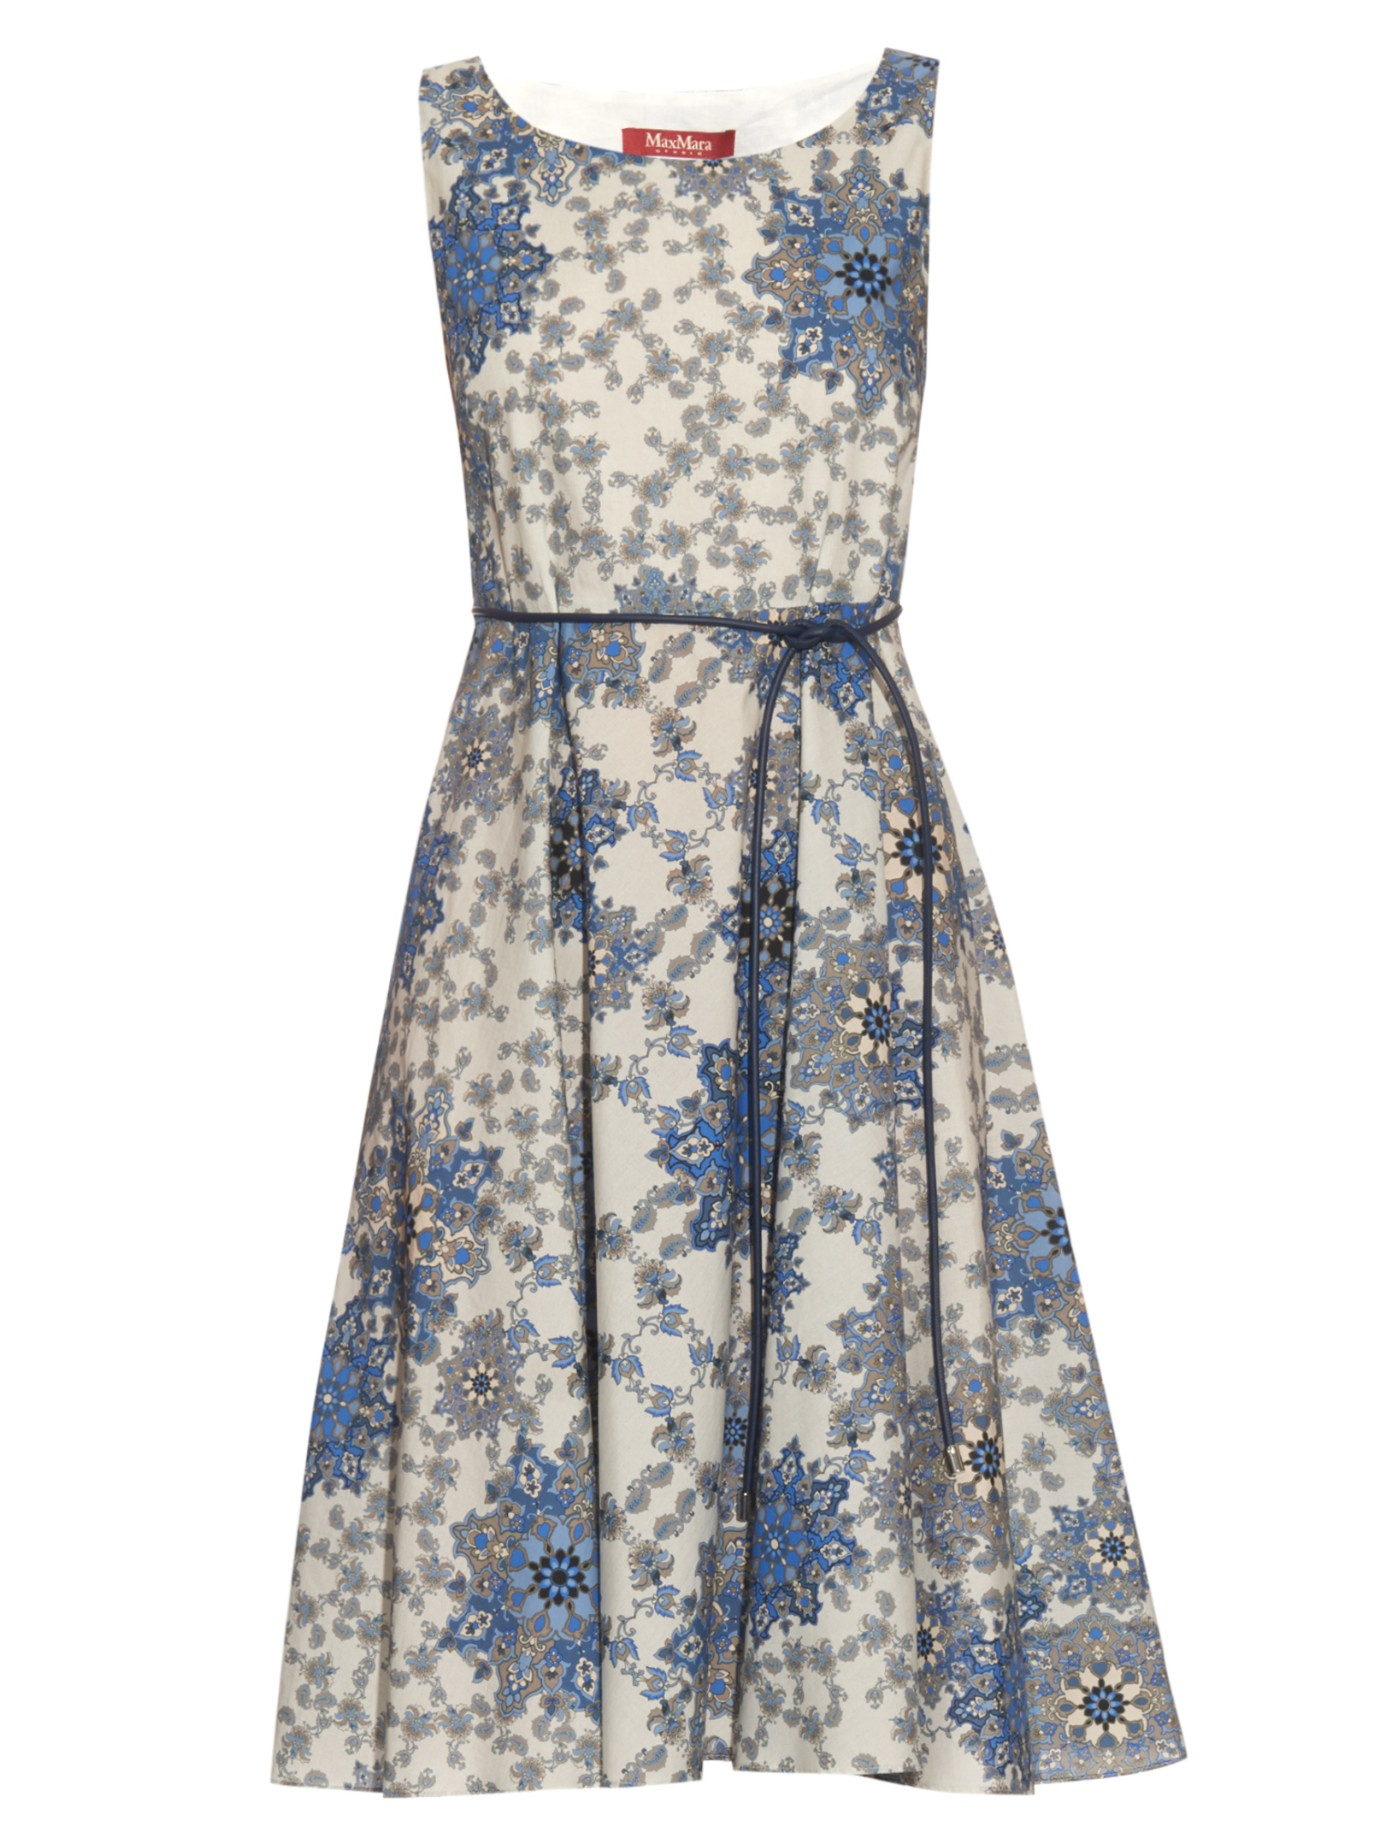 Max Mara Studio Cotton Maresca Dress in Blue Print (Blue) - Lyst